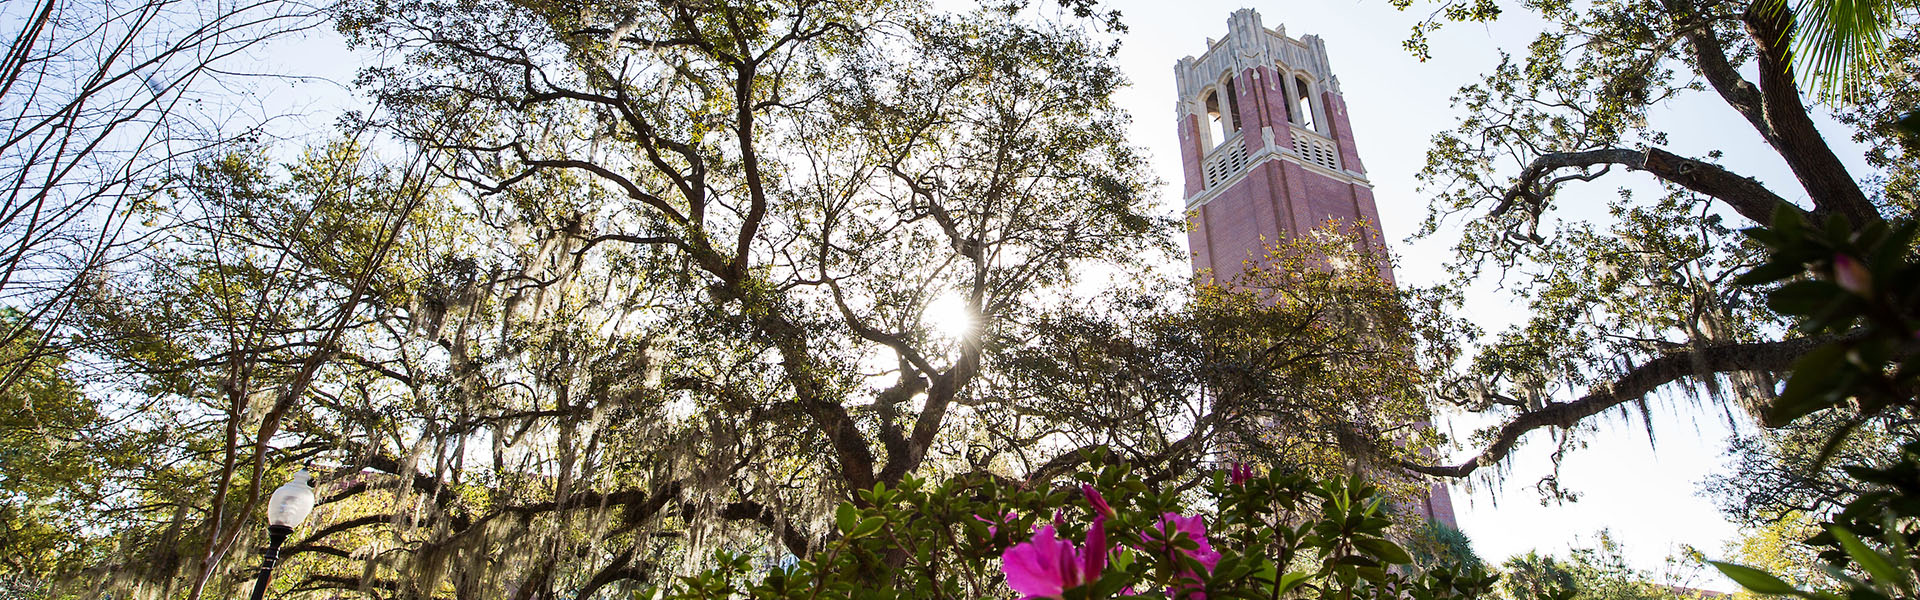 University of Florida's iconic Century Tower surrounded by spring foliage.